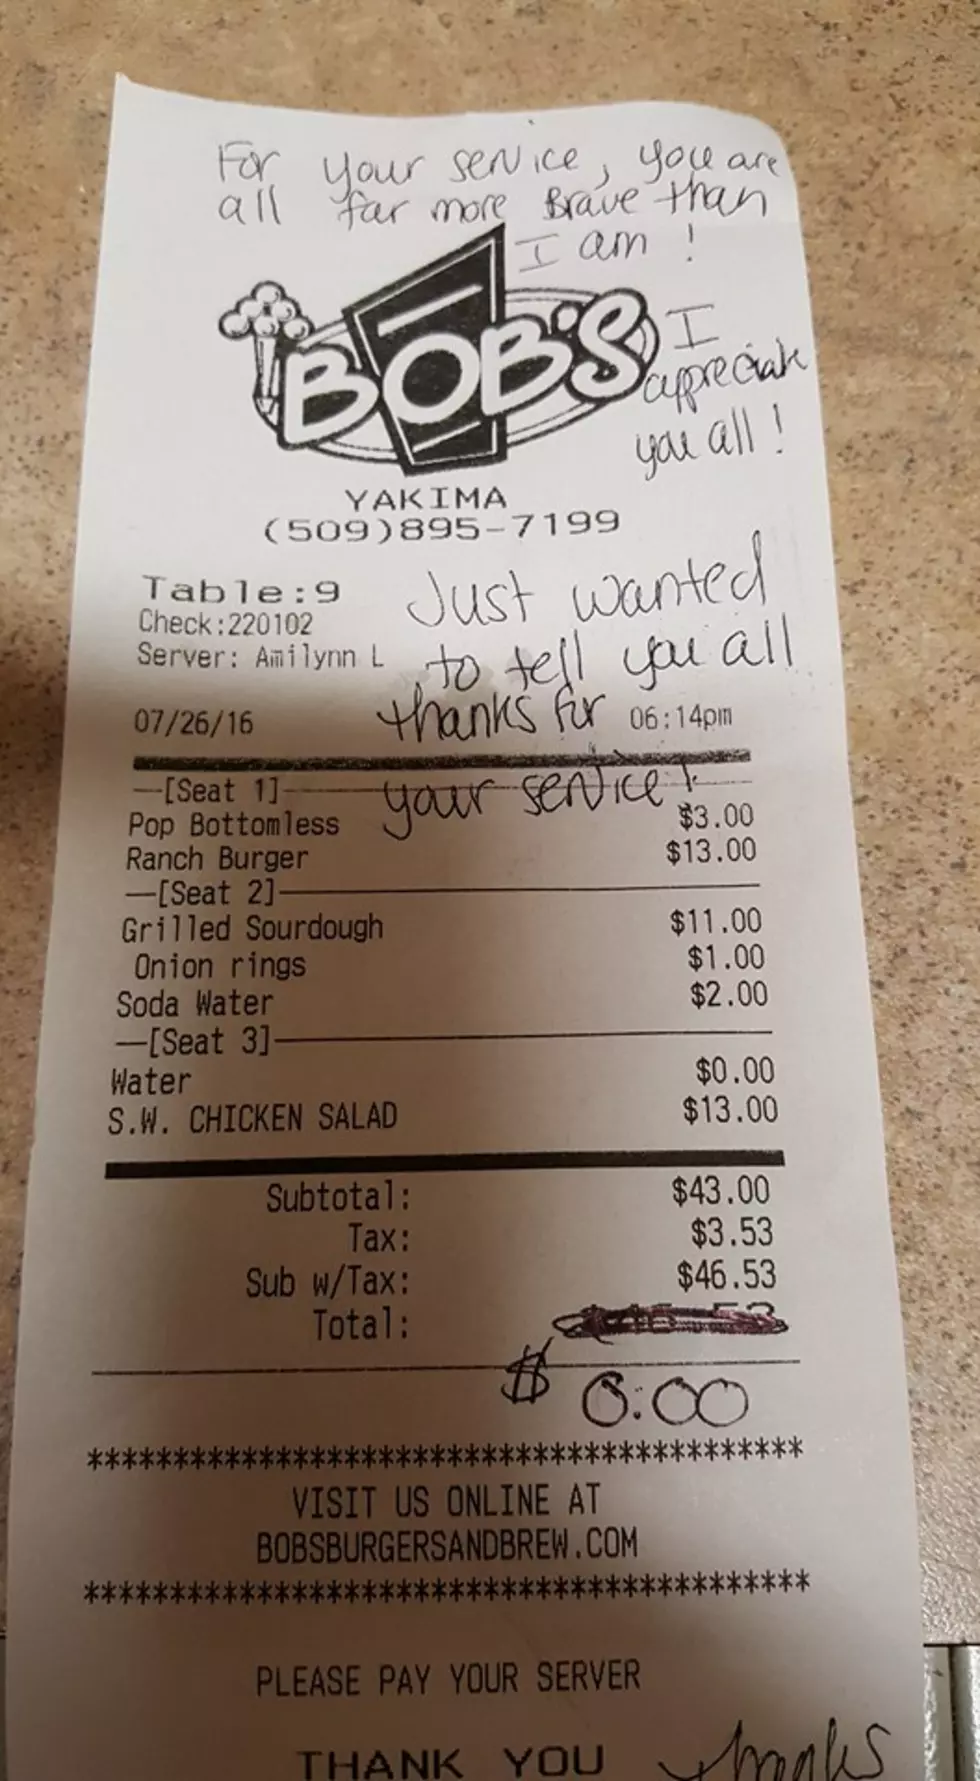 Yakima Restaurant Server Pays It Forward To Local Police